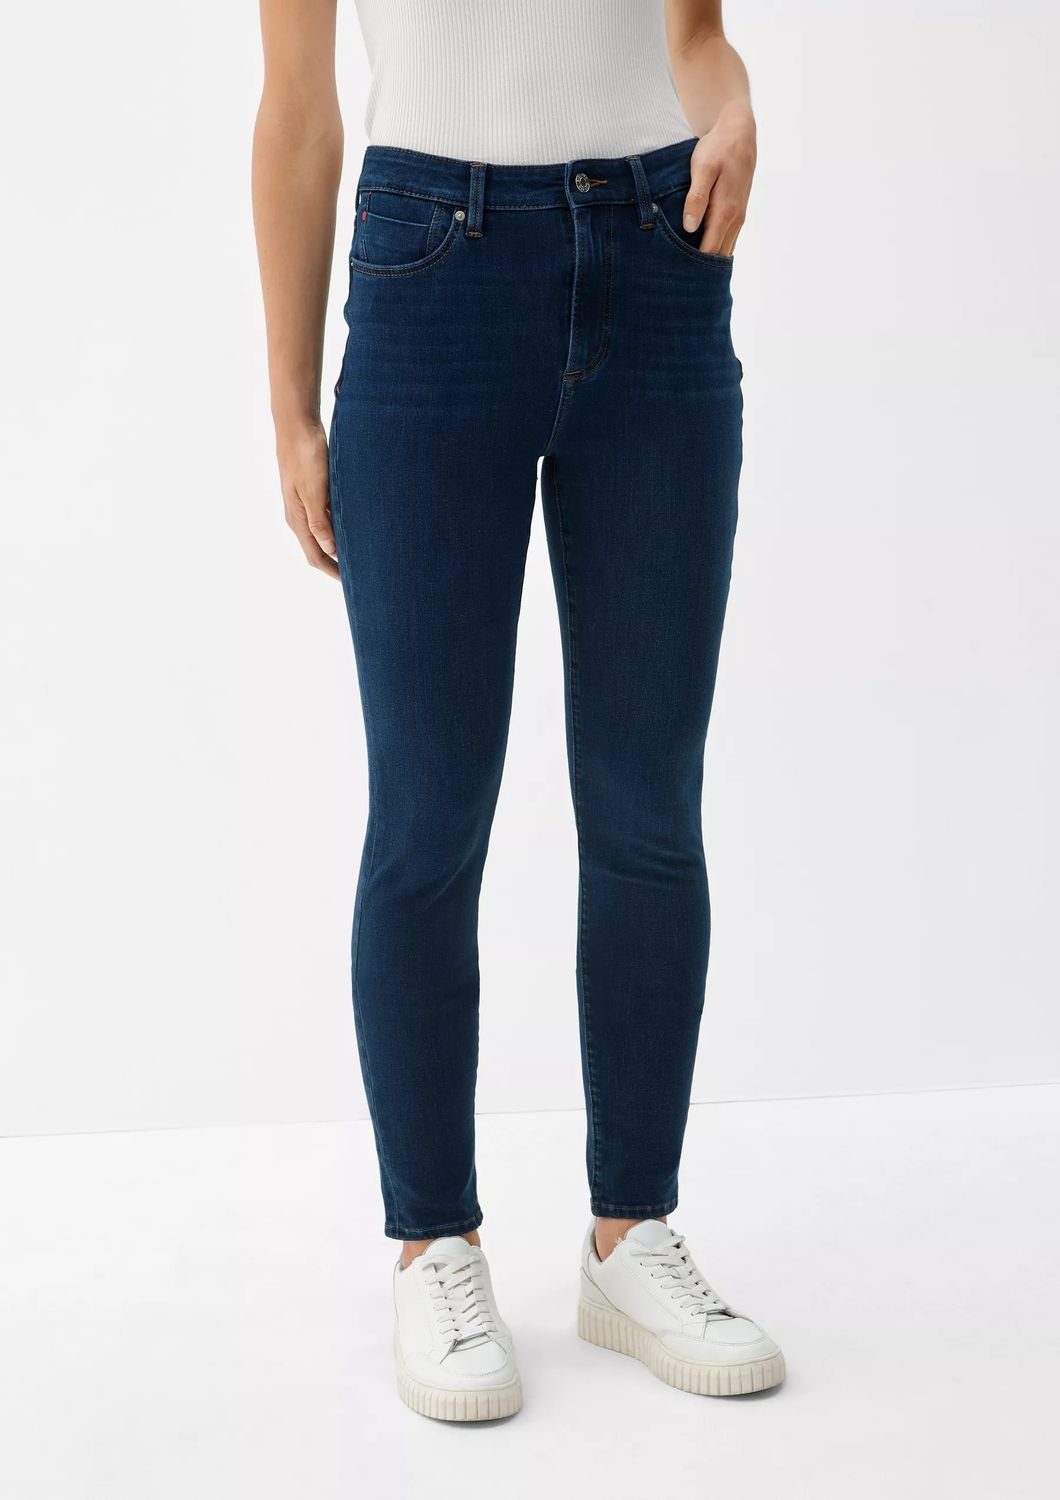 s.Oliver Skinny-fit-Jeans IZABELL Passform: Skinny-Leg-Form Beinverlauf: Bundhöhe: High rise, Skinny